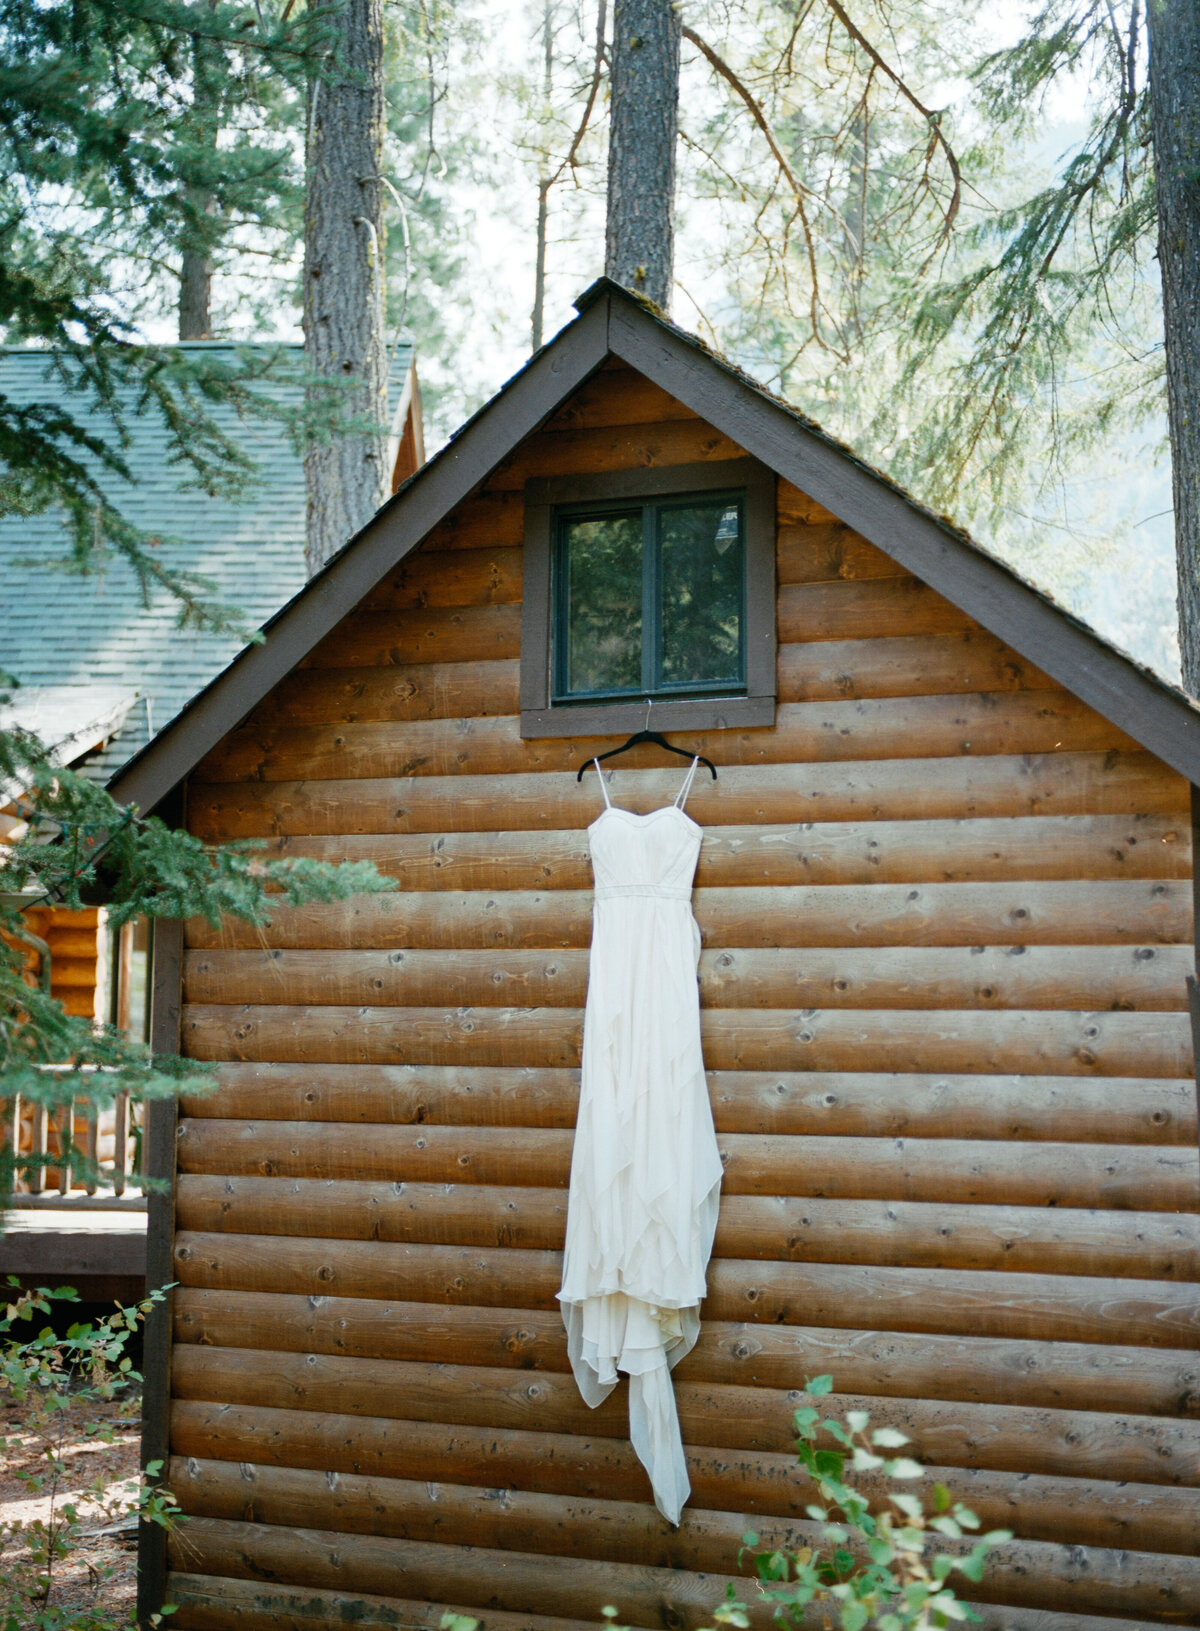 Brides wedding dress hung up on cabin